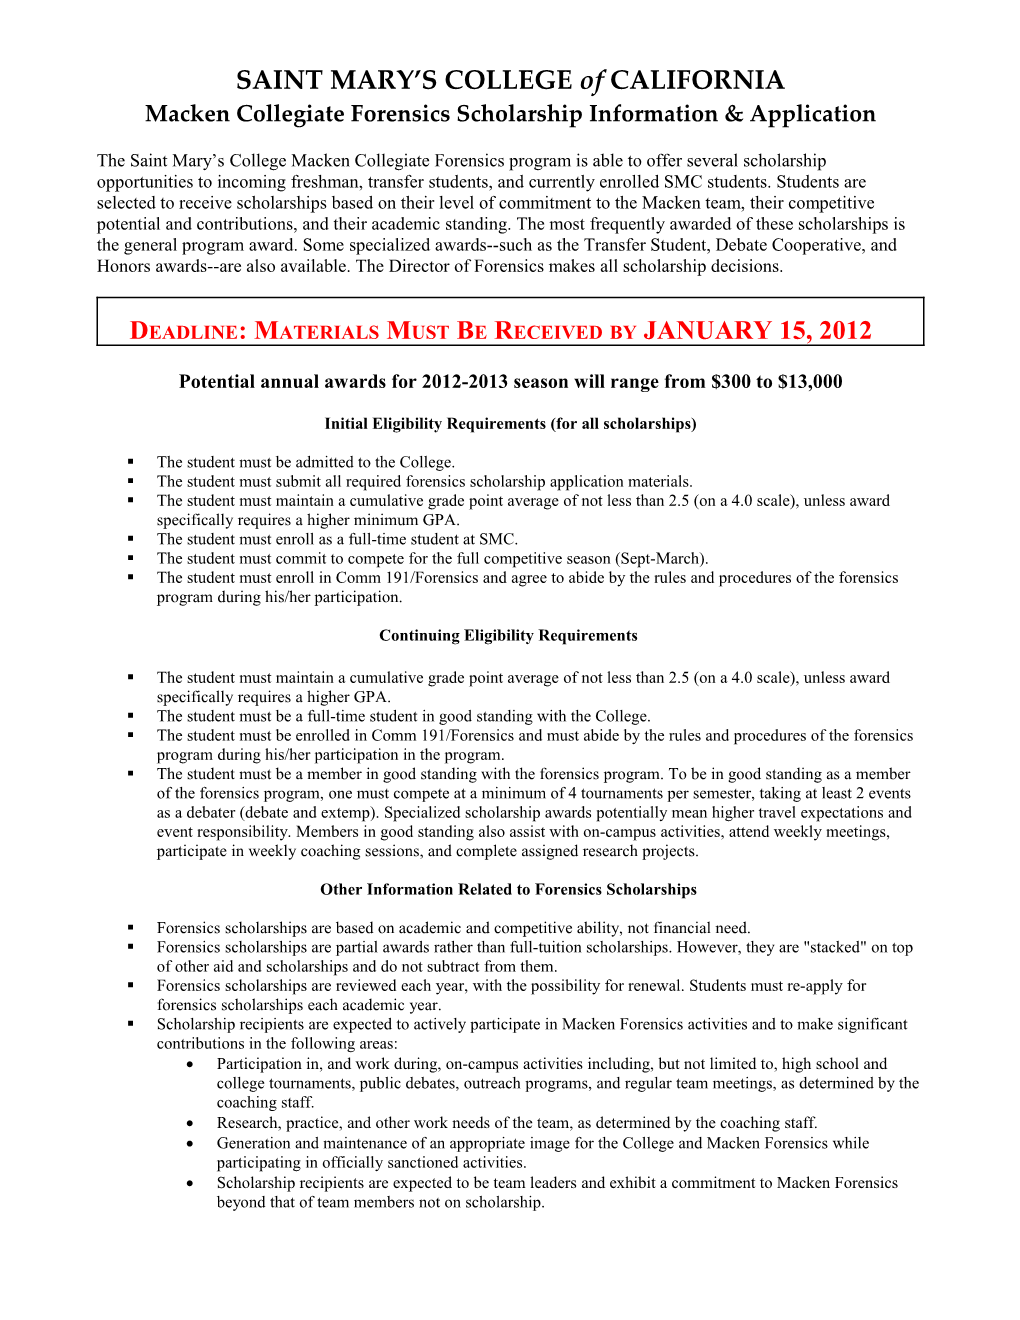 Macken Collegiate Forensics Scholarship Information & Application